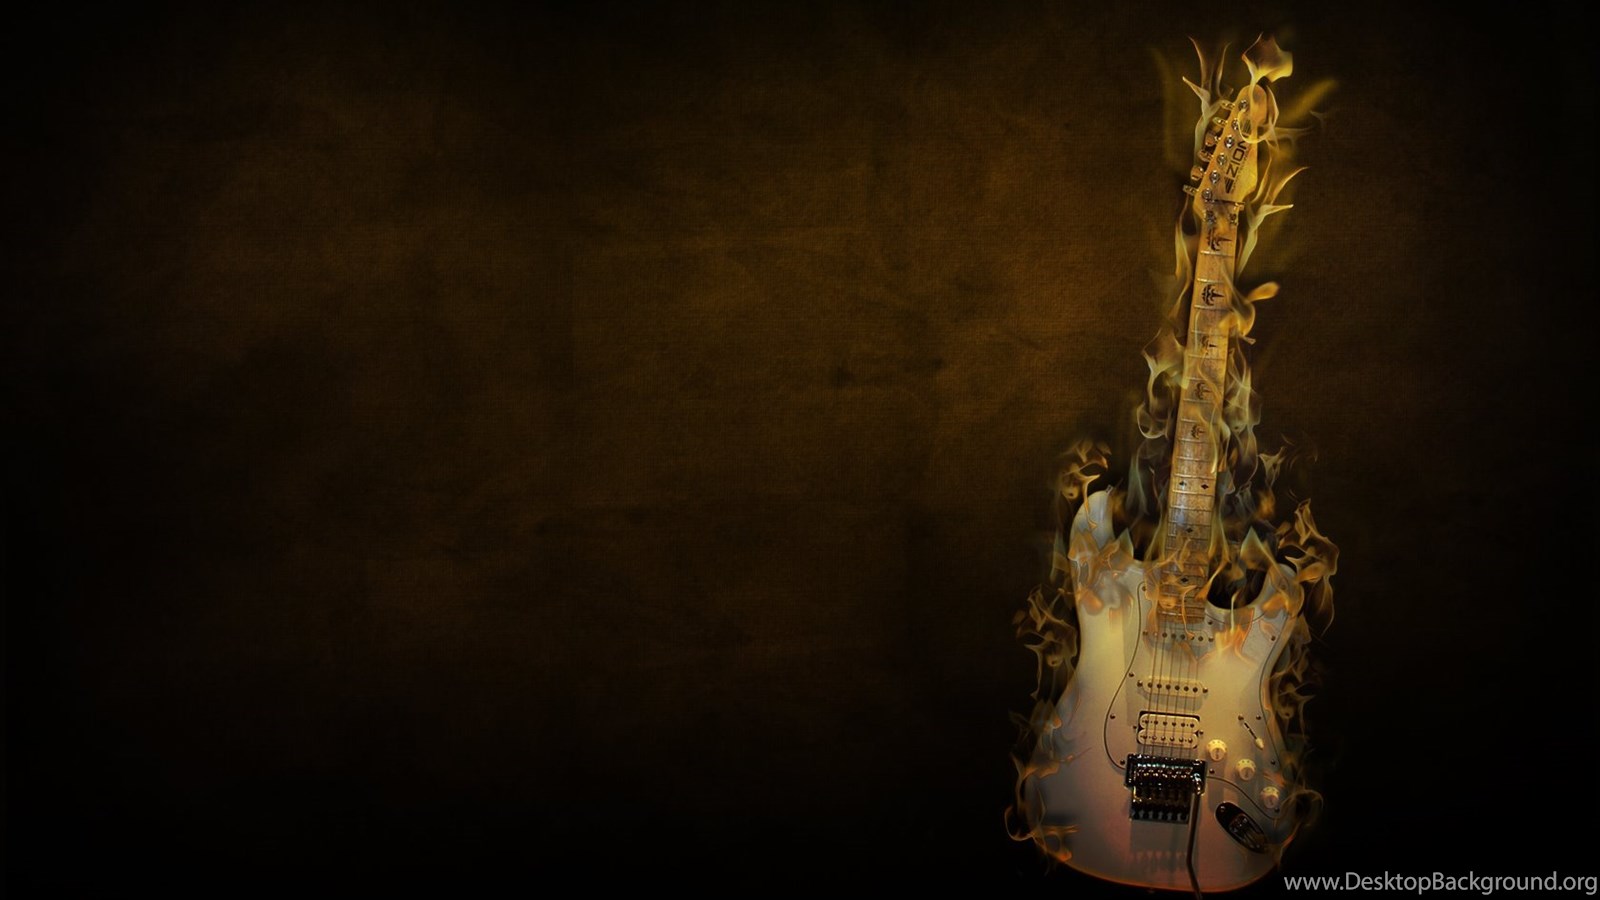 Download The Flaming Guitar Wallpaper, Flaming Guitar iPhone. Desktop Background